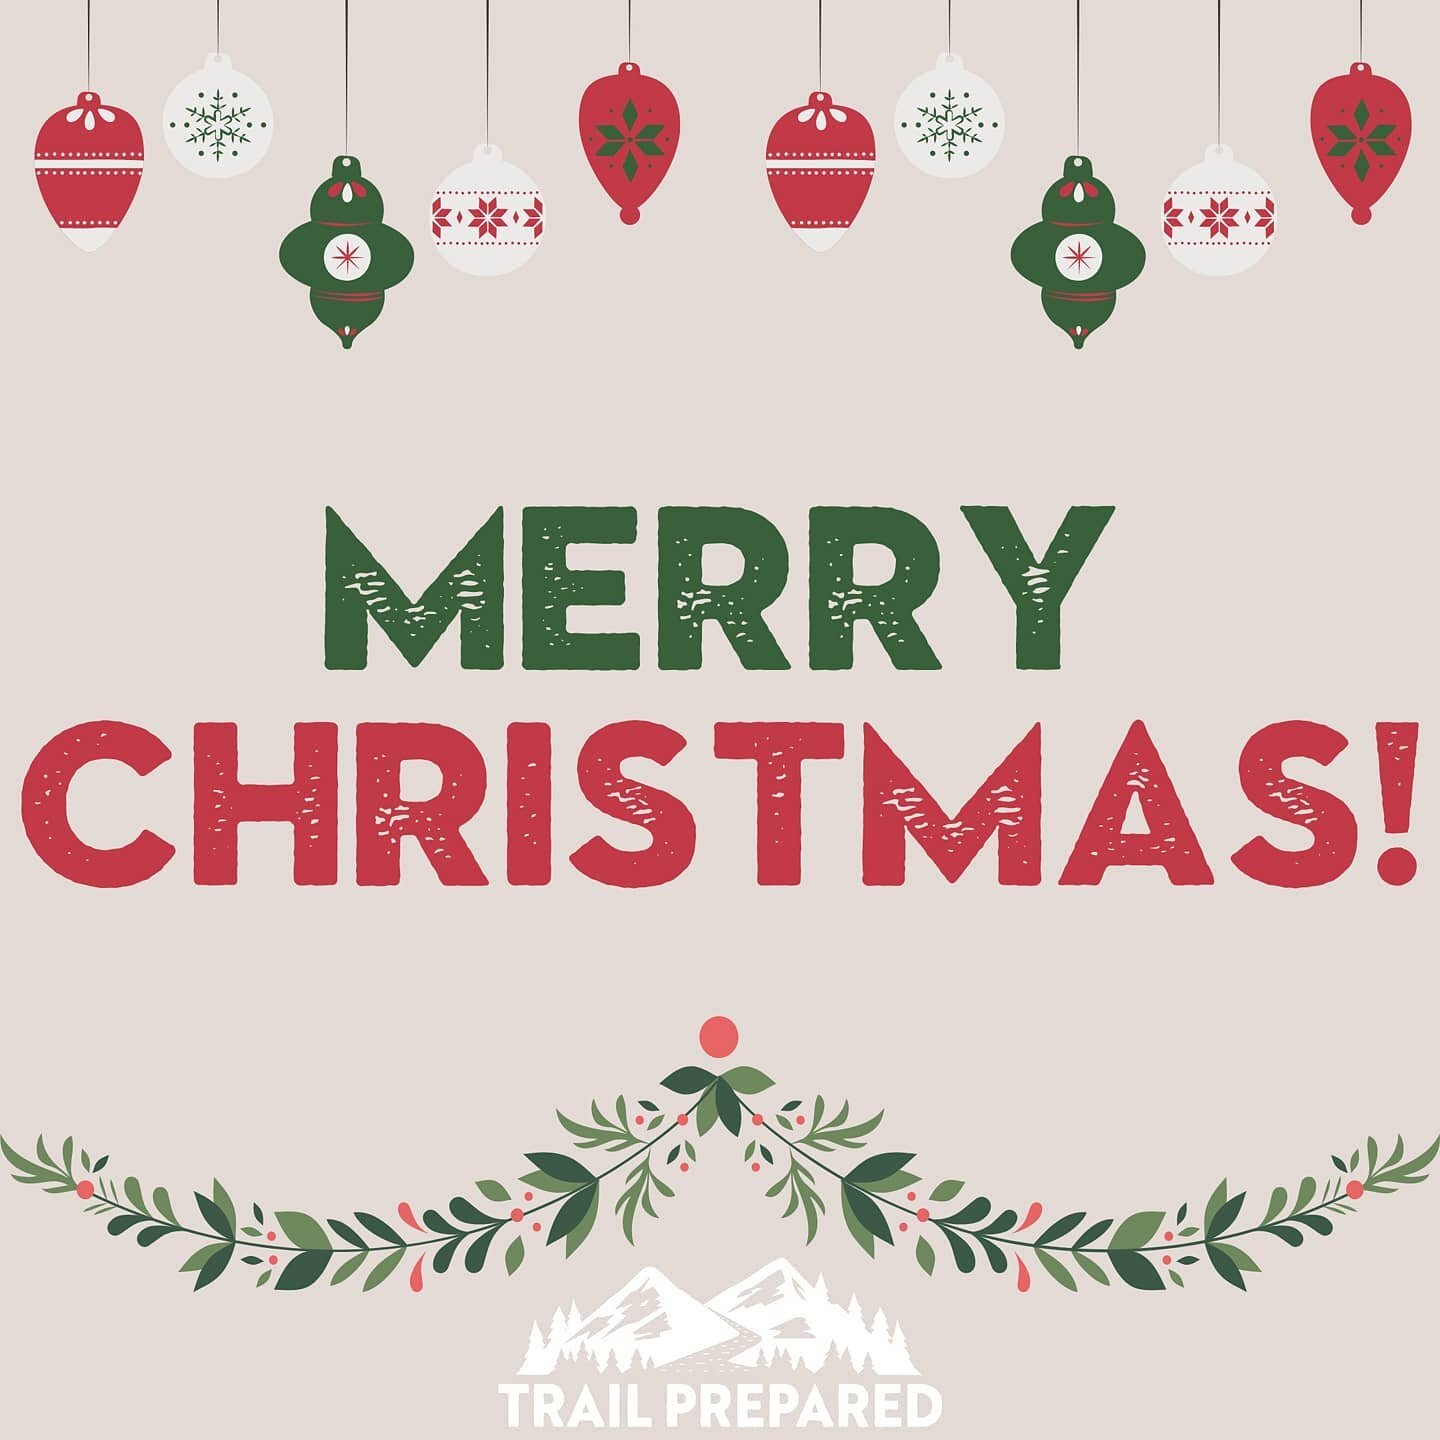 Merry Christmas!🎄⛄🎅❄️
-
-
-
-
-
#Christmas #MerryChristmas #Merry #Holiday #Holidays #HappyHolidays #TisTheSeason #Noel #Festive #SeasonsGreetings #Season #Winter #Santa #SantaClaus #EggNog #Freedom #USA #Liberty #Family #Friends #TrailPrepared #Yo